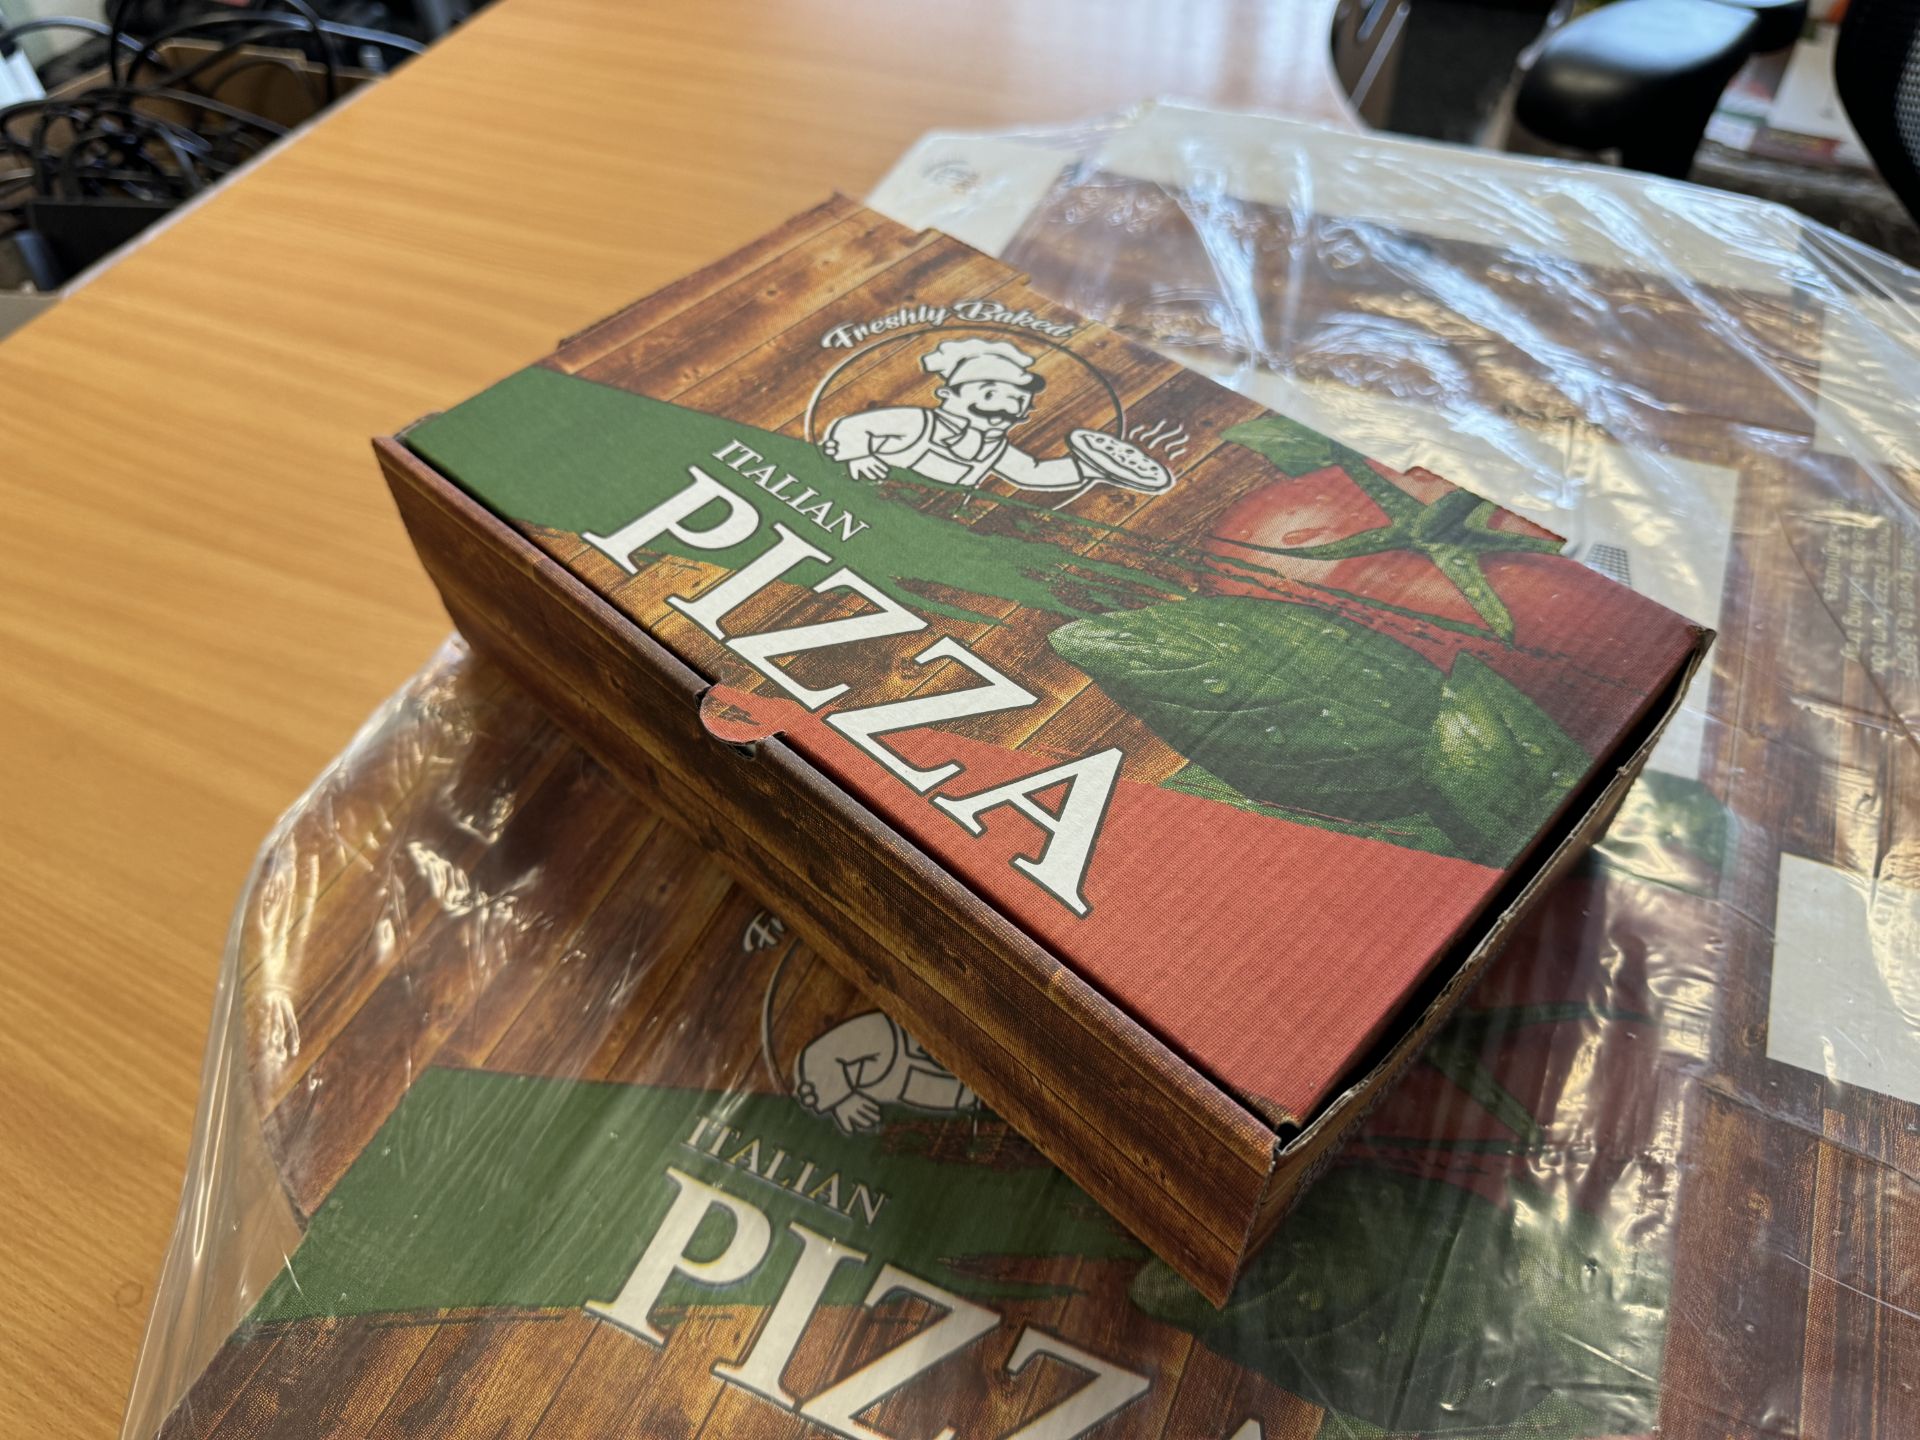 Circa 900 - Italian Pizza Calzone Boxes (Cardboard) - Multiple Uses RRP £130 - Bild 3 aus 8